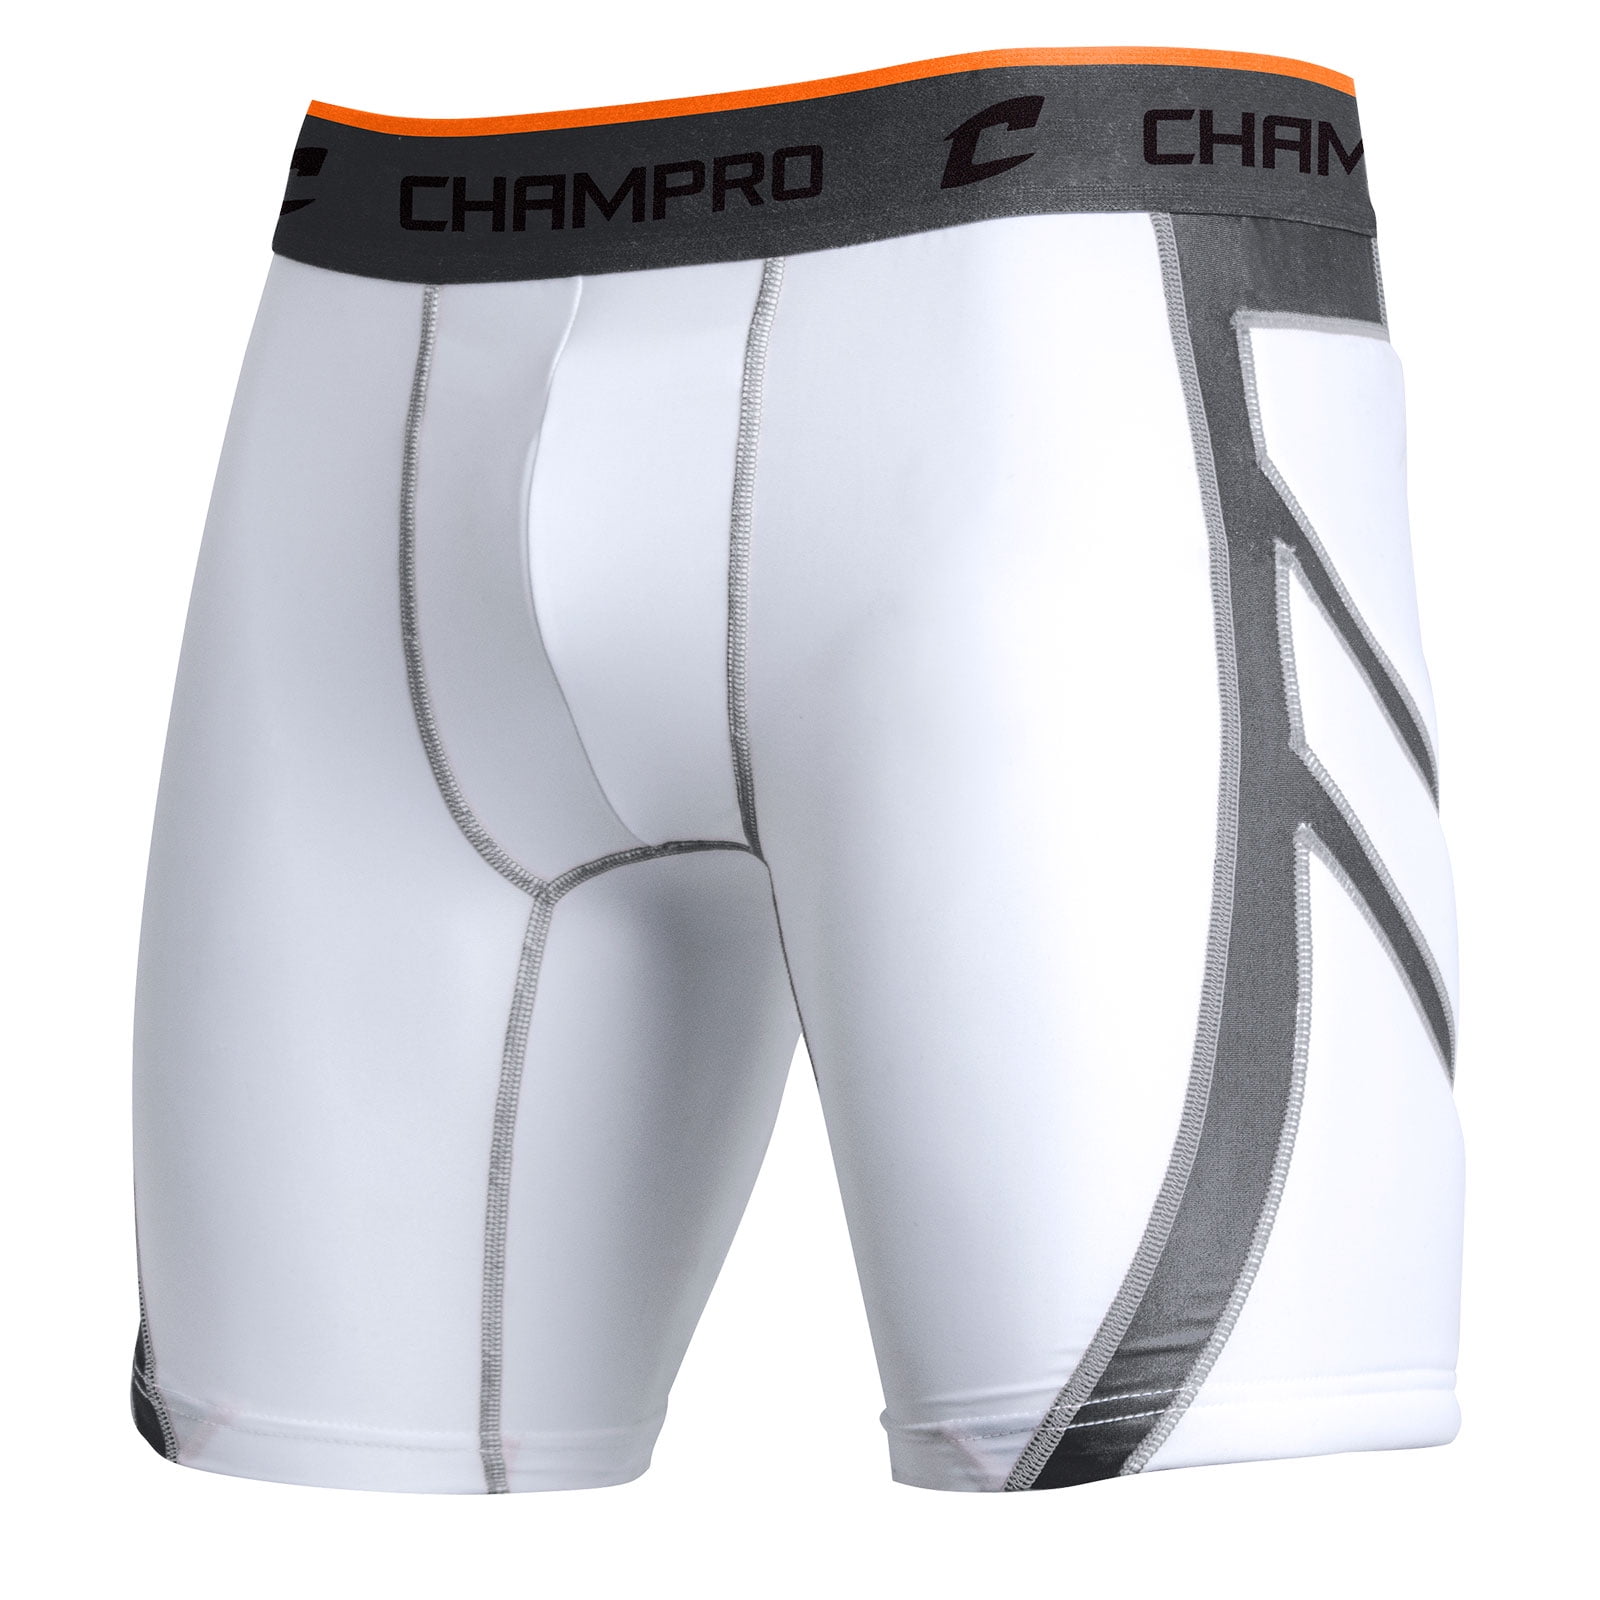 Champro Sports Adult MEN'S Wind-Up Baseball Compression Sliding Shorts Grey